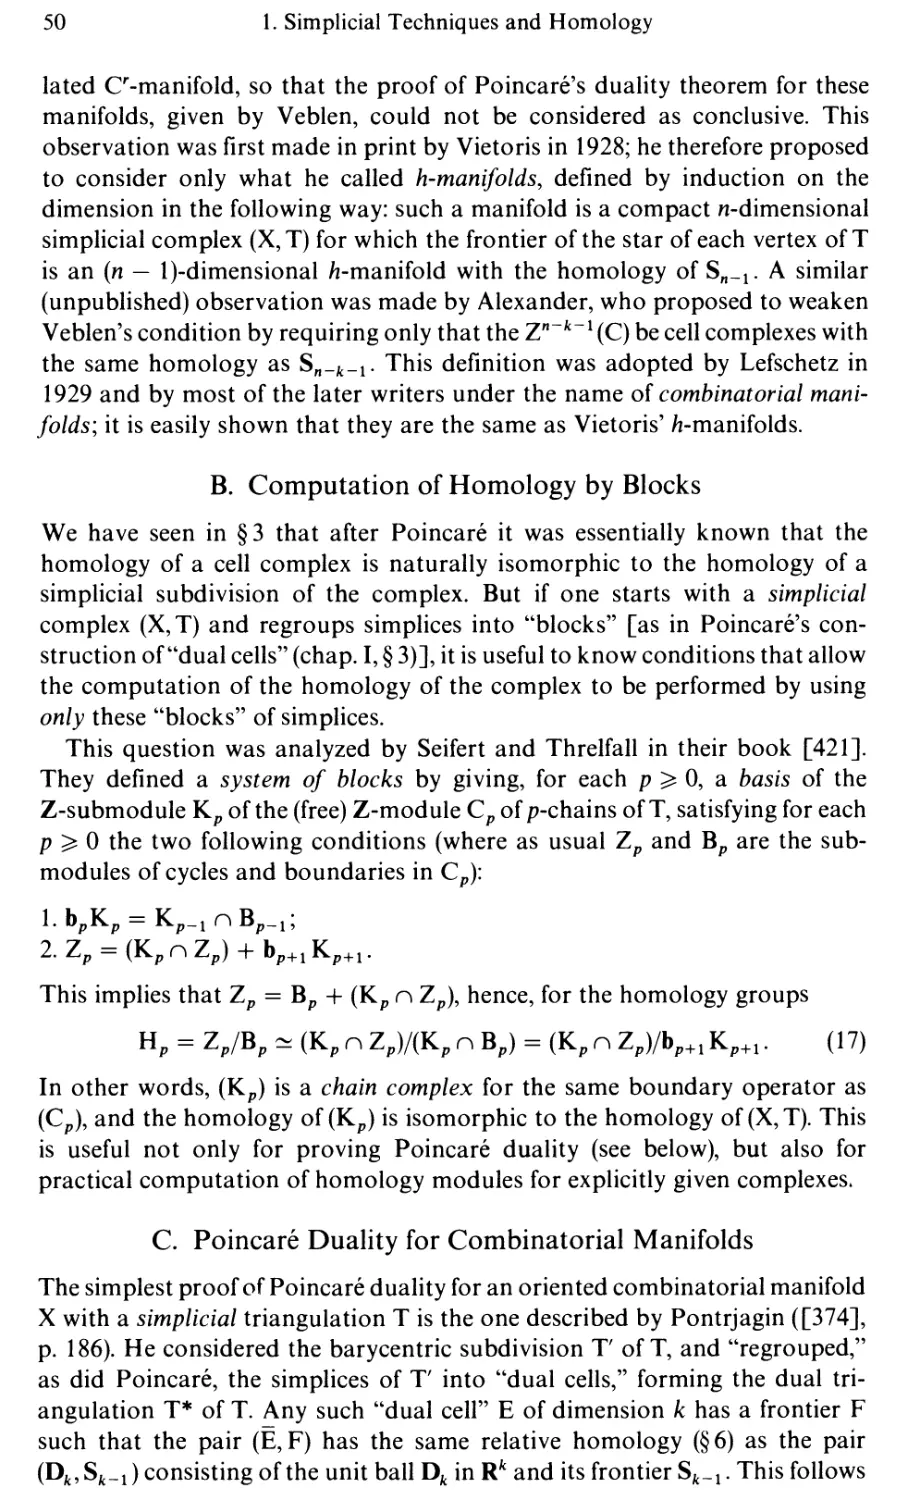 B. Computation of Homology by Blocks
C. Poincaré Duality for Combinatorial Manifolds